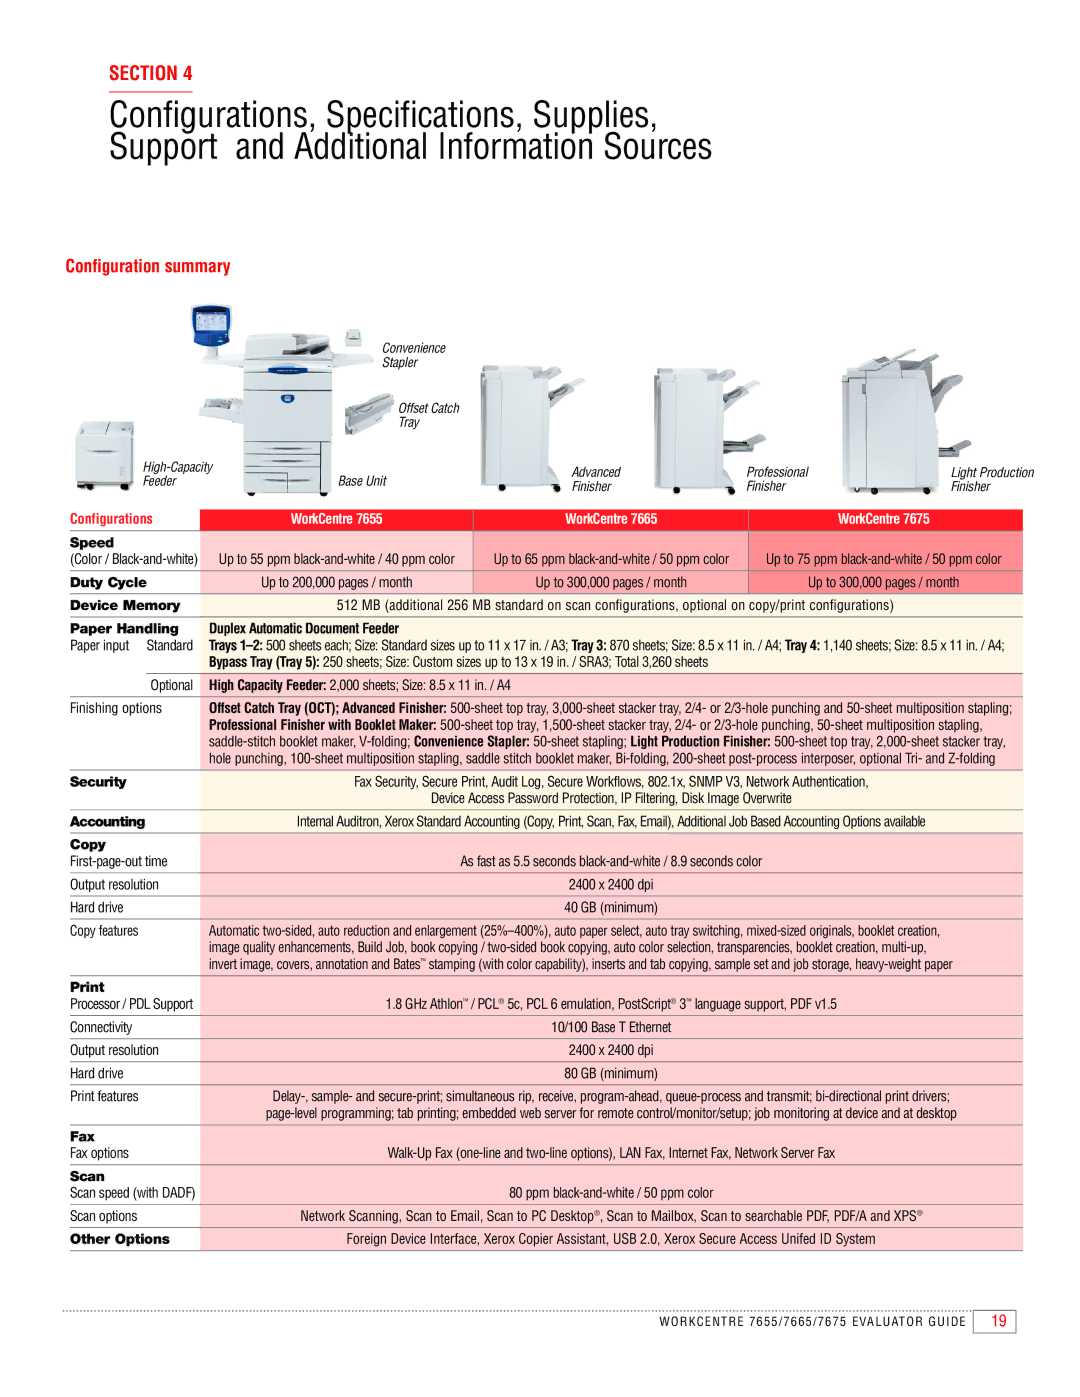 Xerox 7655, 7665, 7675 manual Configuration summary, WorkCentre 